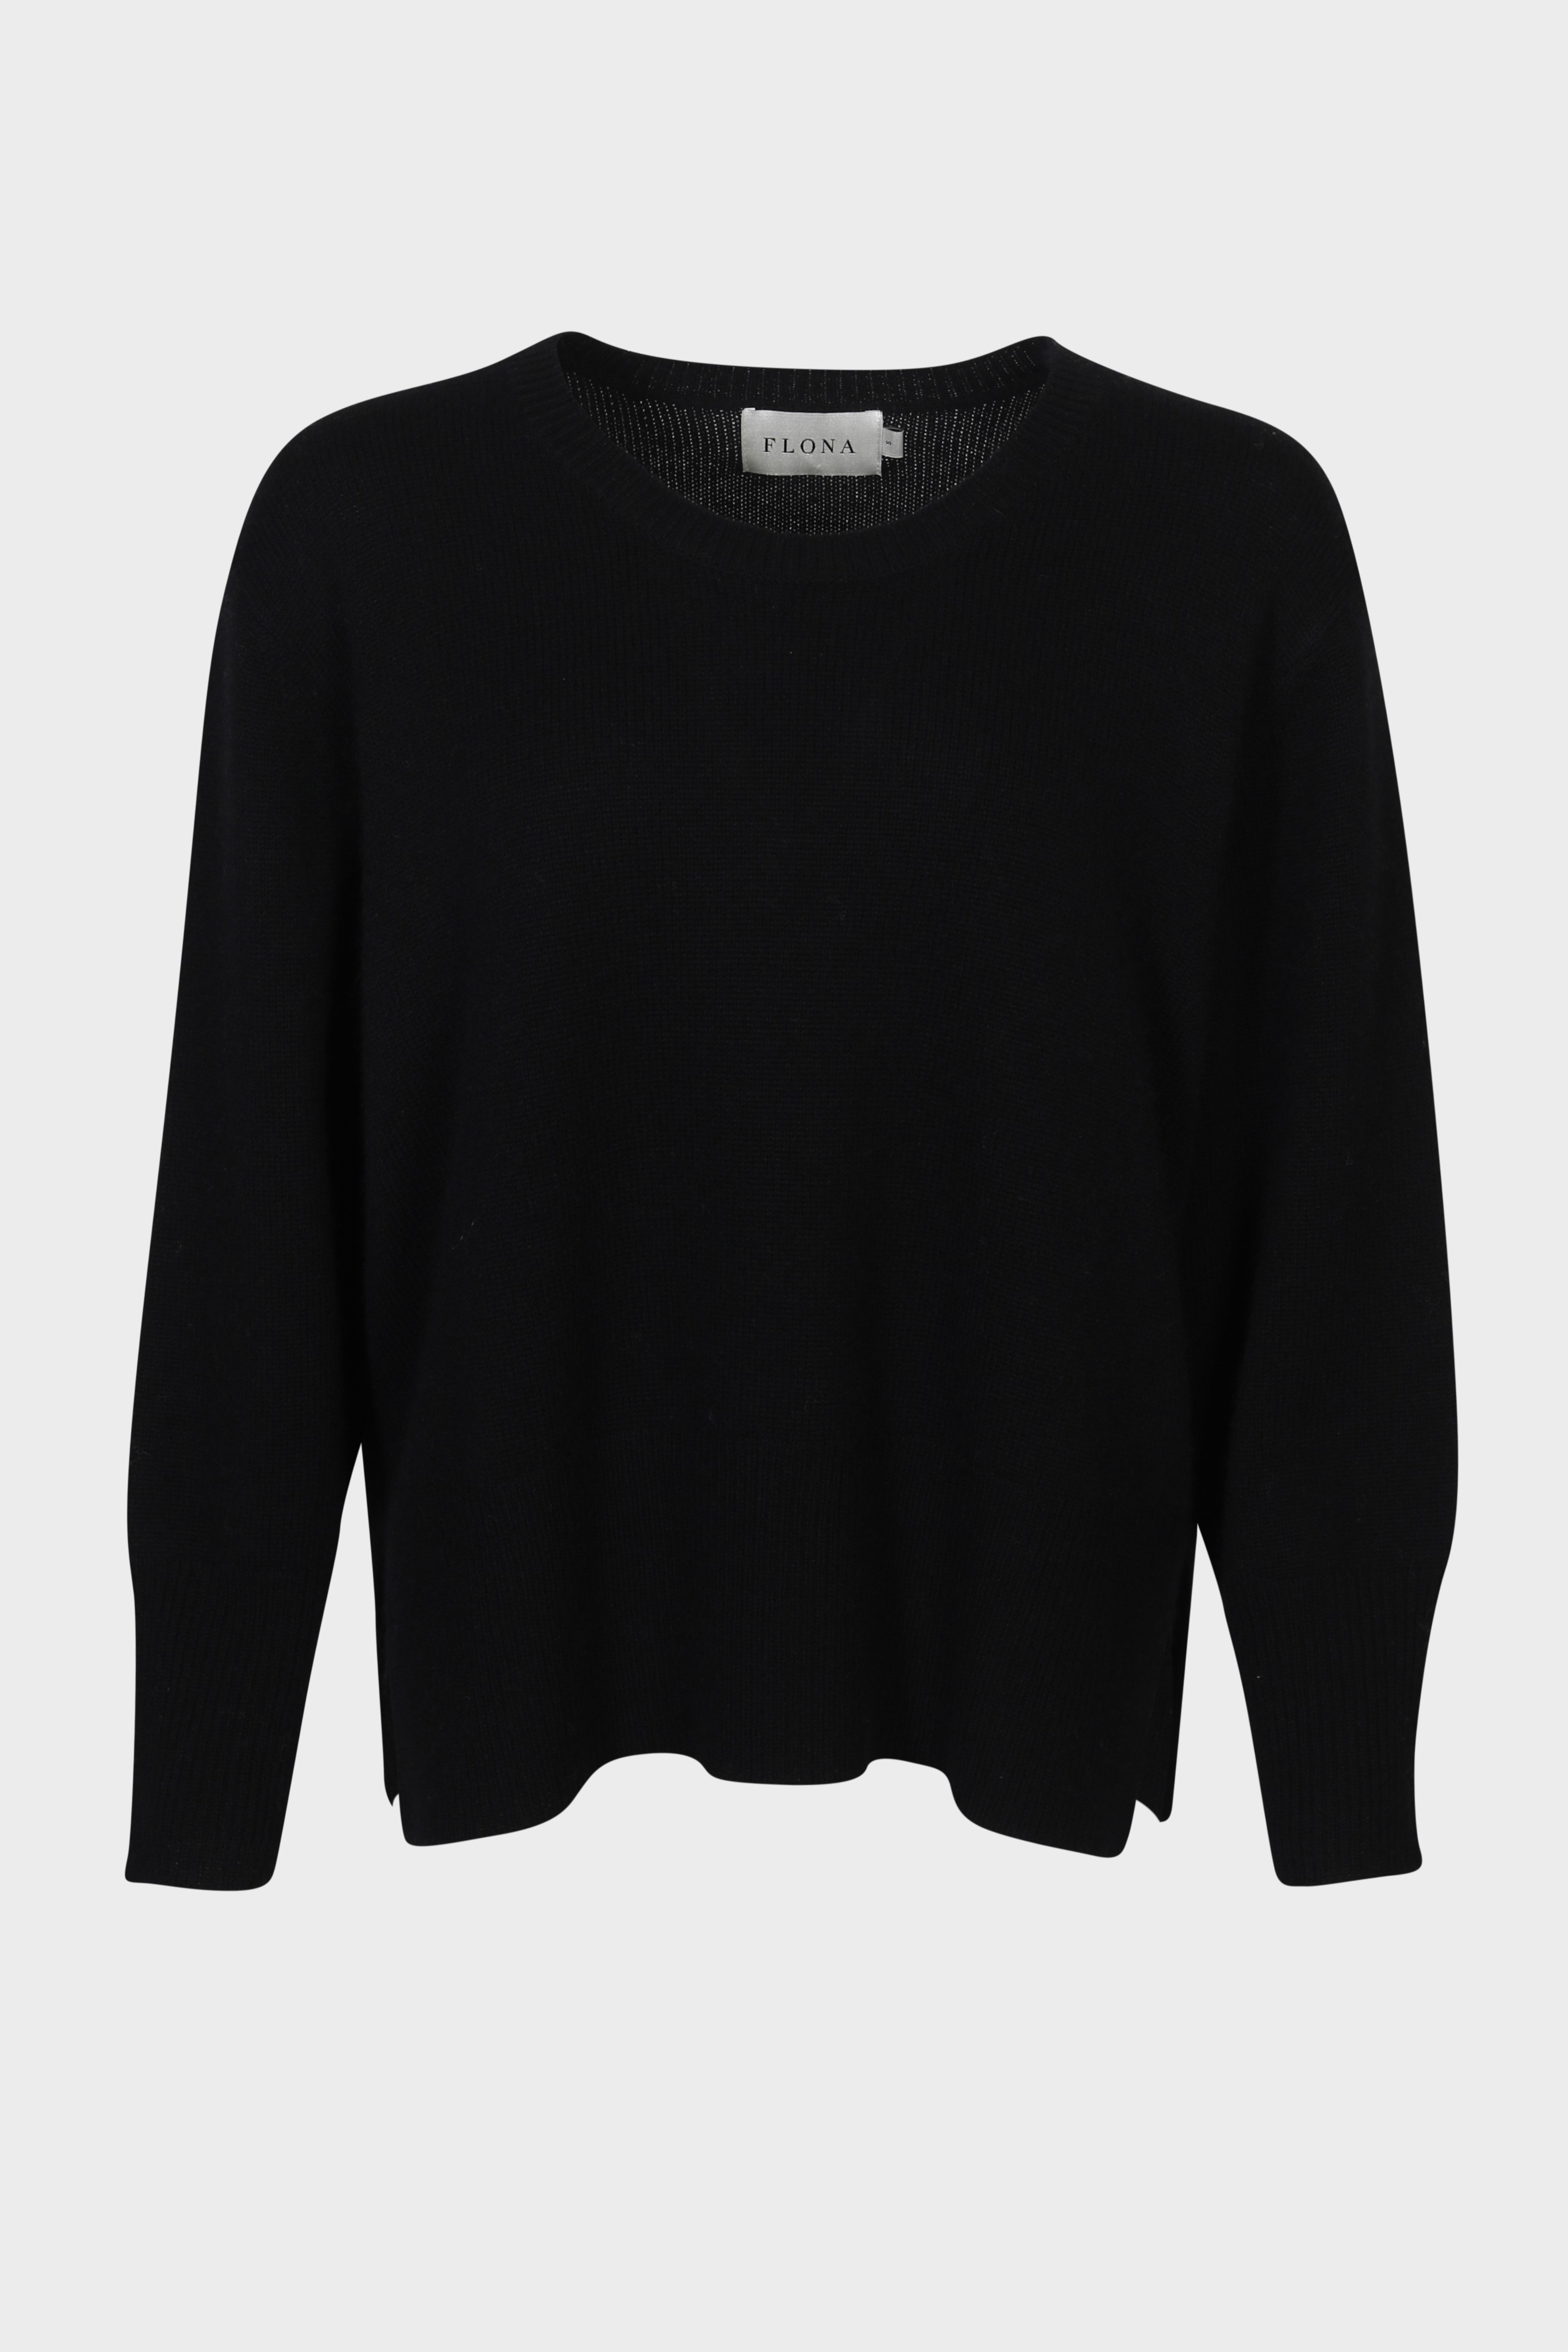 FLONA Cashmere Sweater in Black S